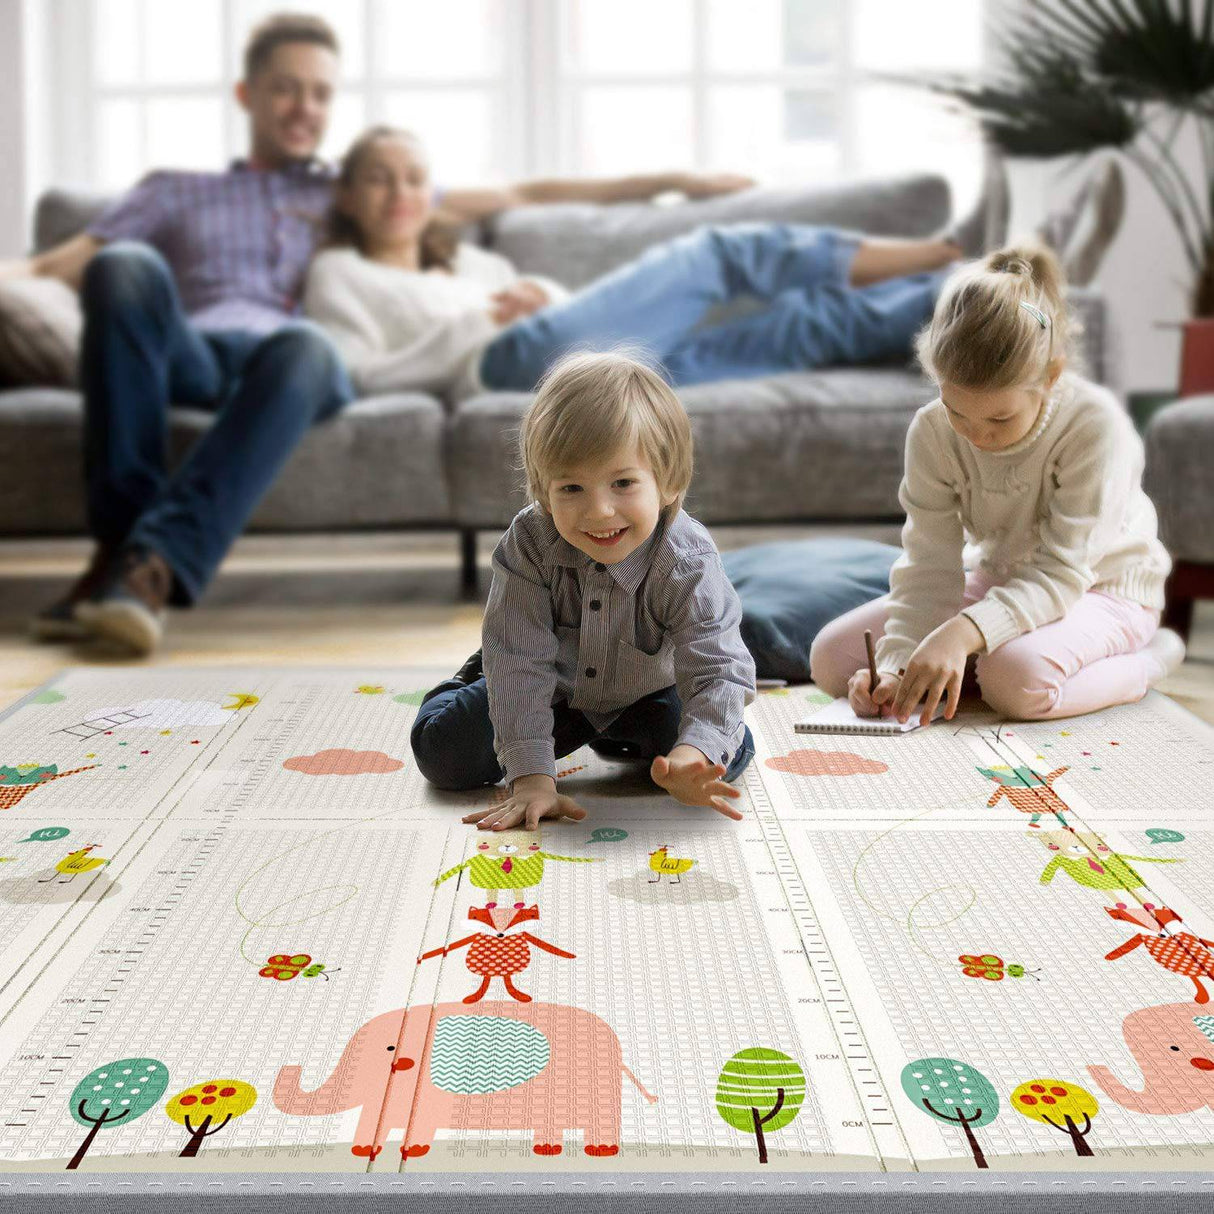 YOOVEE Tapete de juego para bebés, tapete impermeable grande para gatear para bebés, tapete reversible para bebés y niños pequeños, fácil de limpiar. - DIGVICE MX